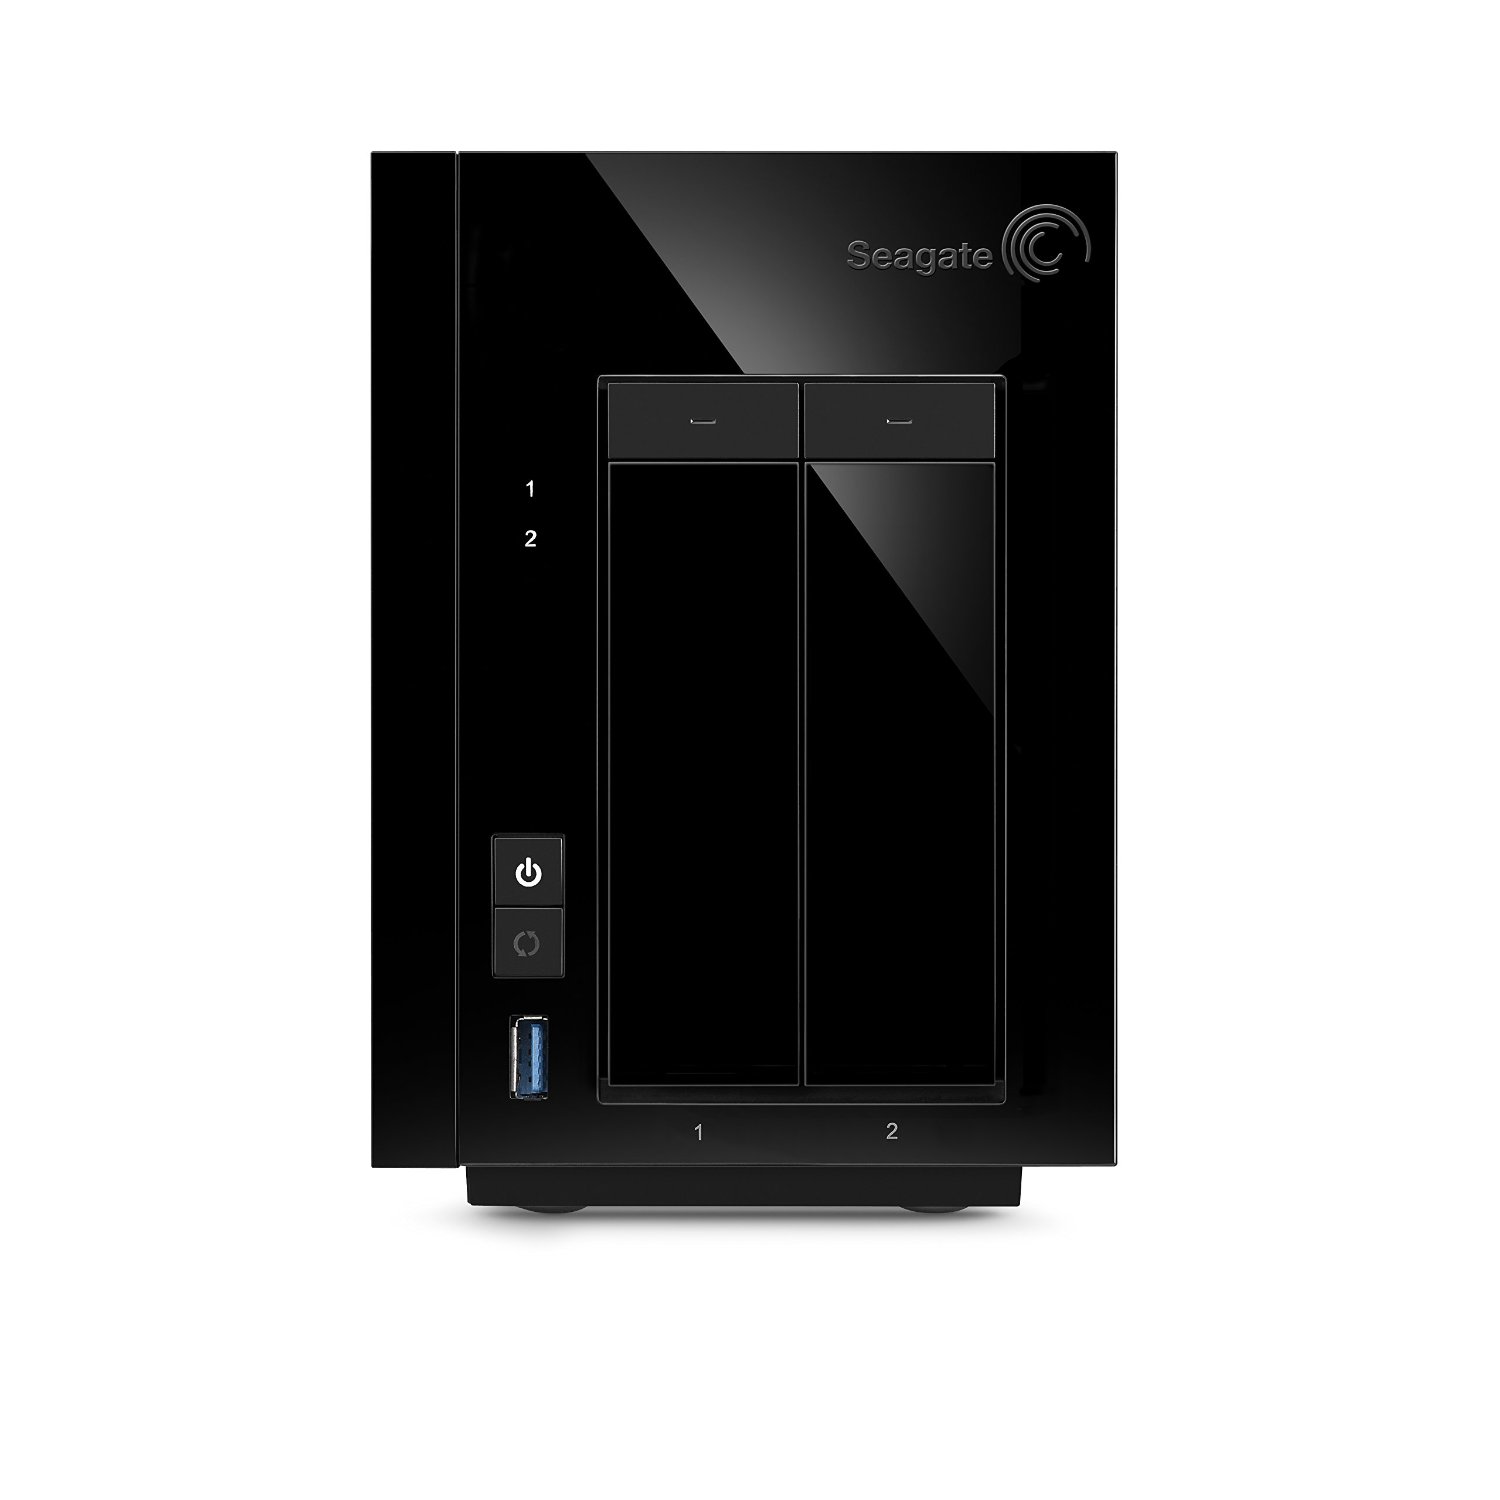 Seagate NAS Pro 2-Bay 4TB Network Attached Storage Drive (STDD4000100)